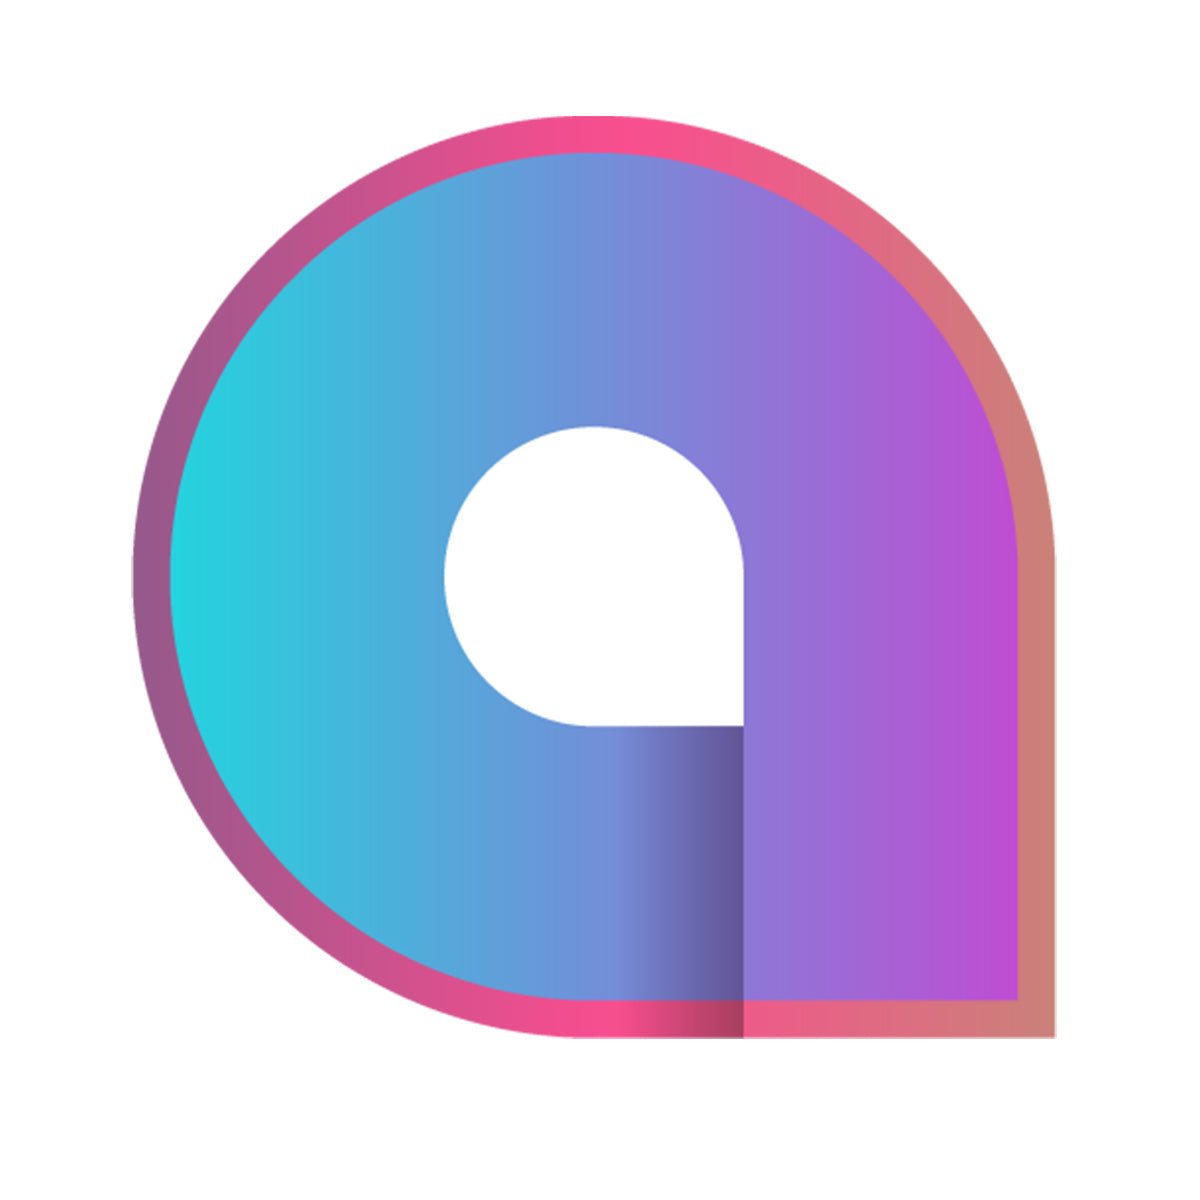 Almund‑Customer Data Platform Shopify App